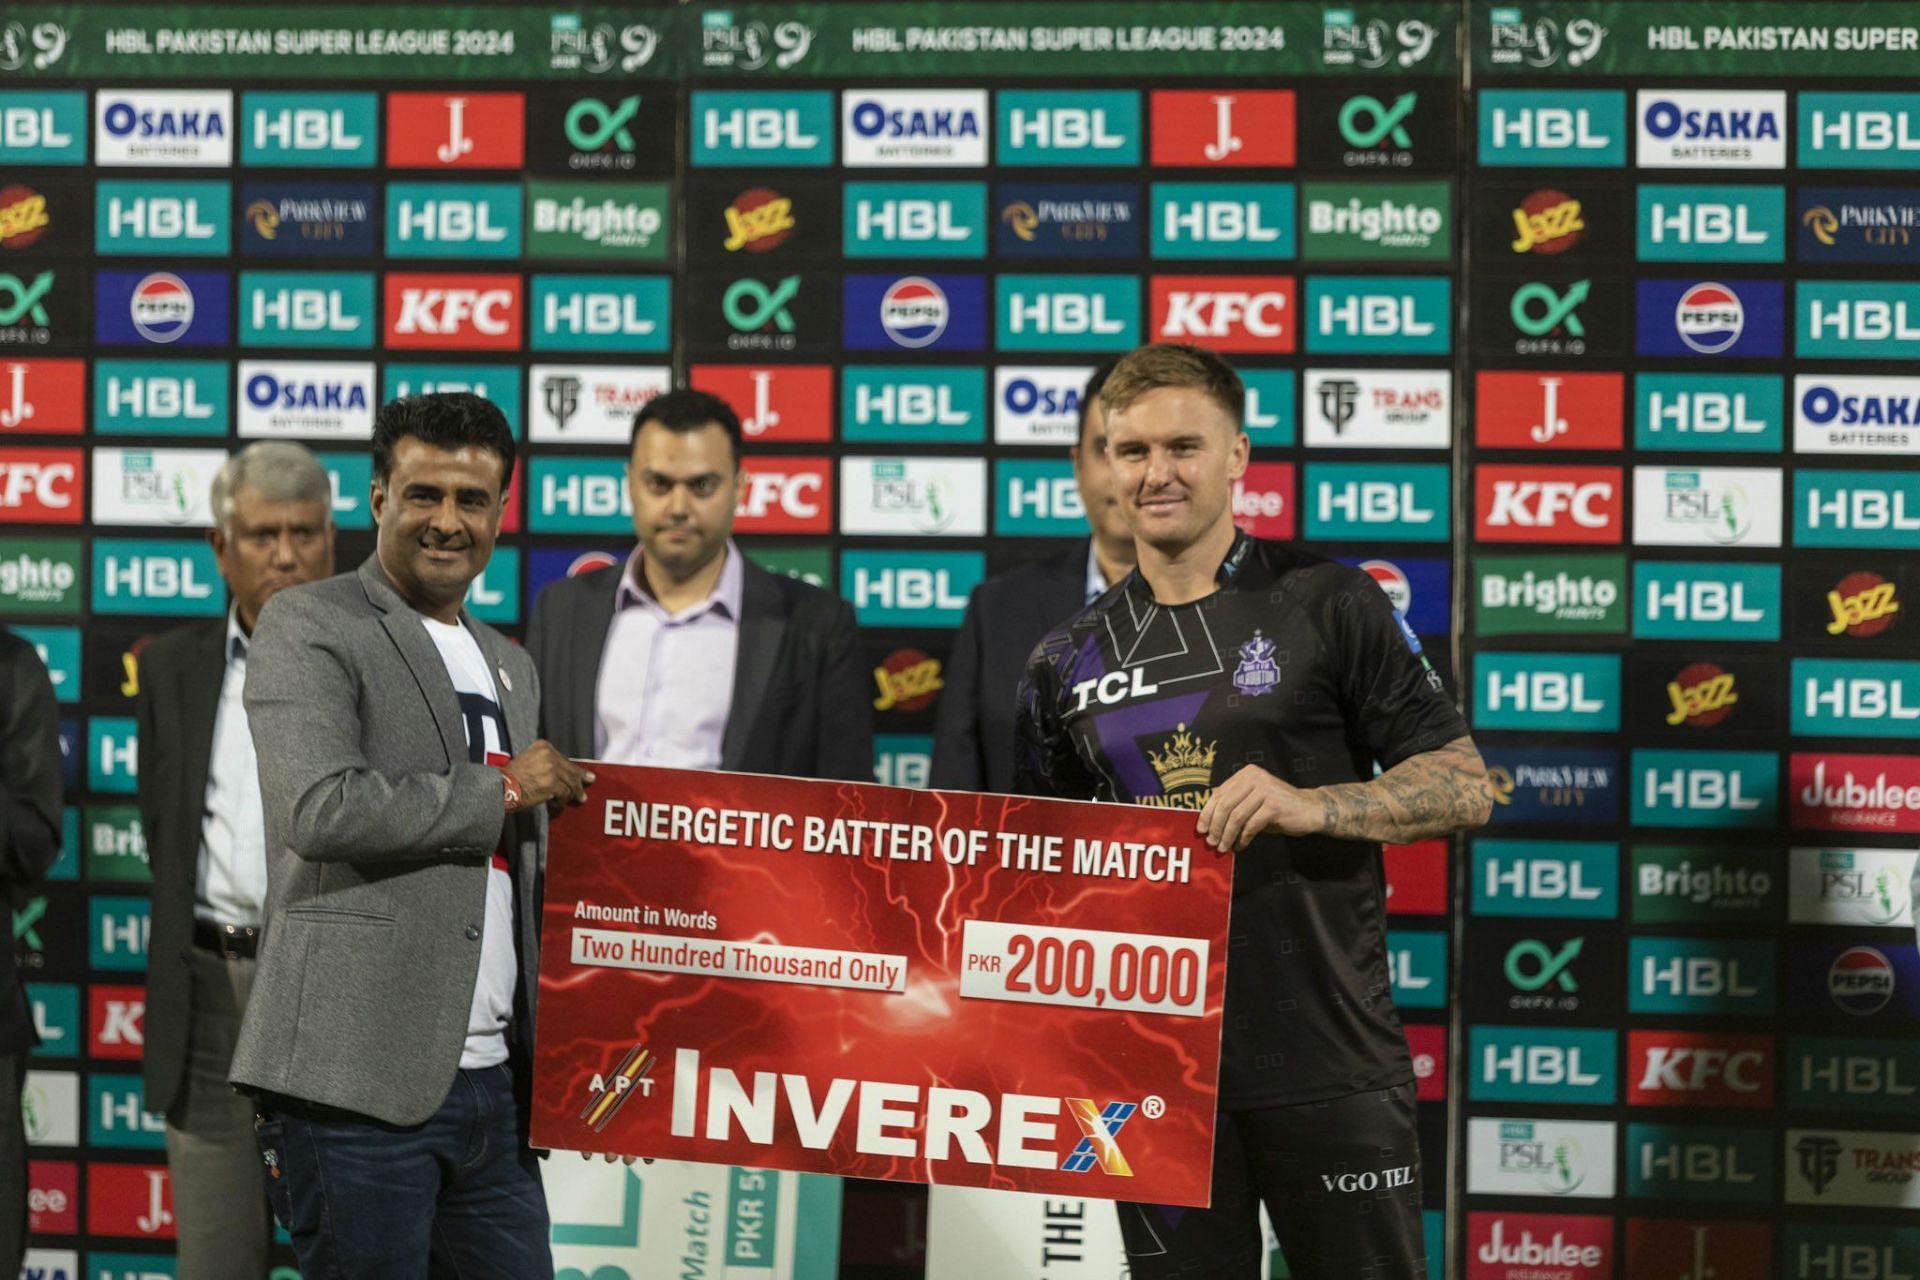 Jason Roy receiving an award (Image Courtesy: X/Pakistan Super League)